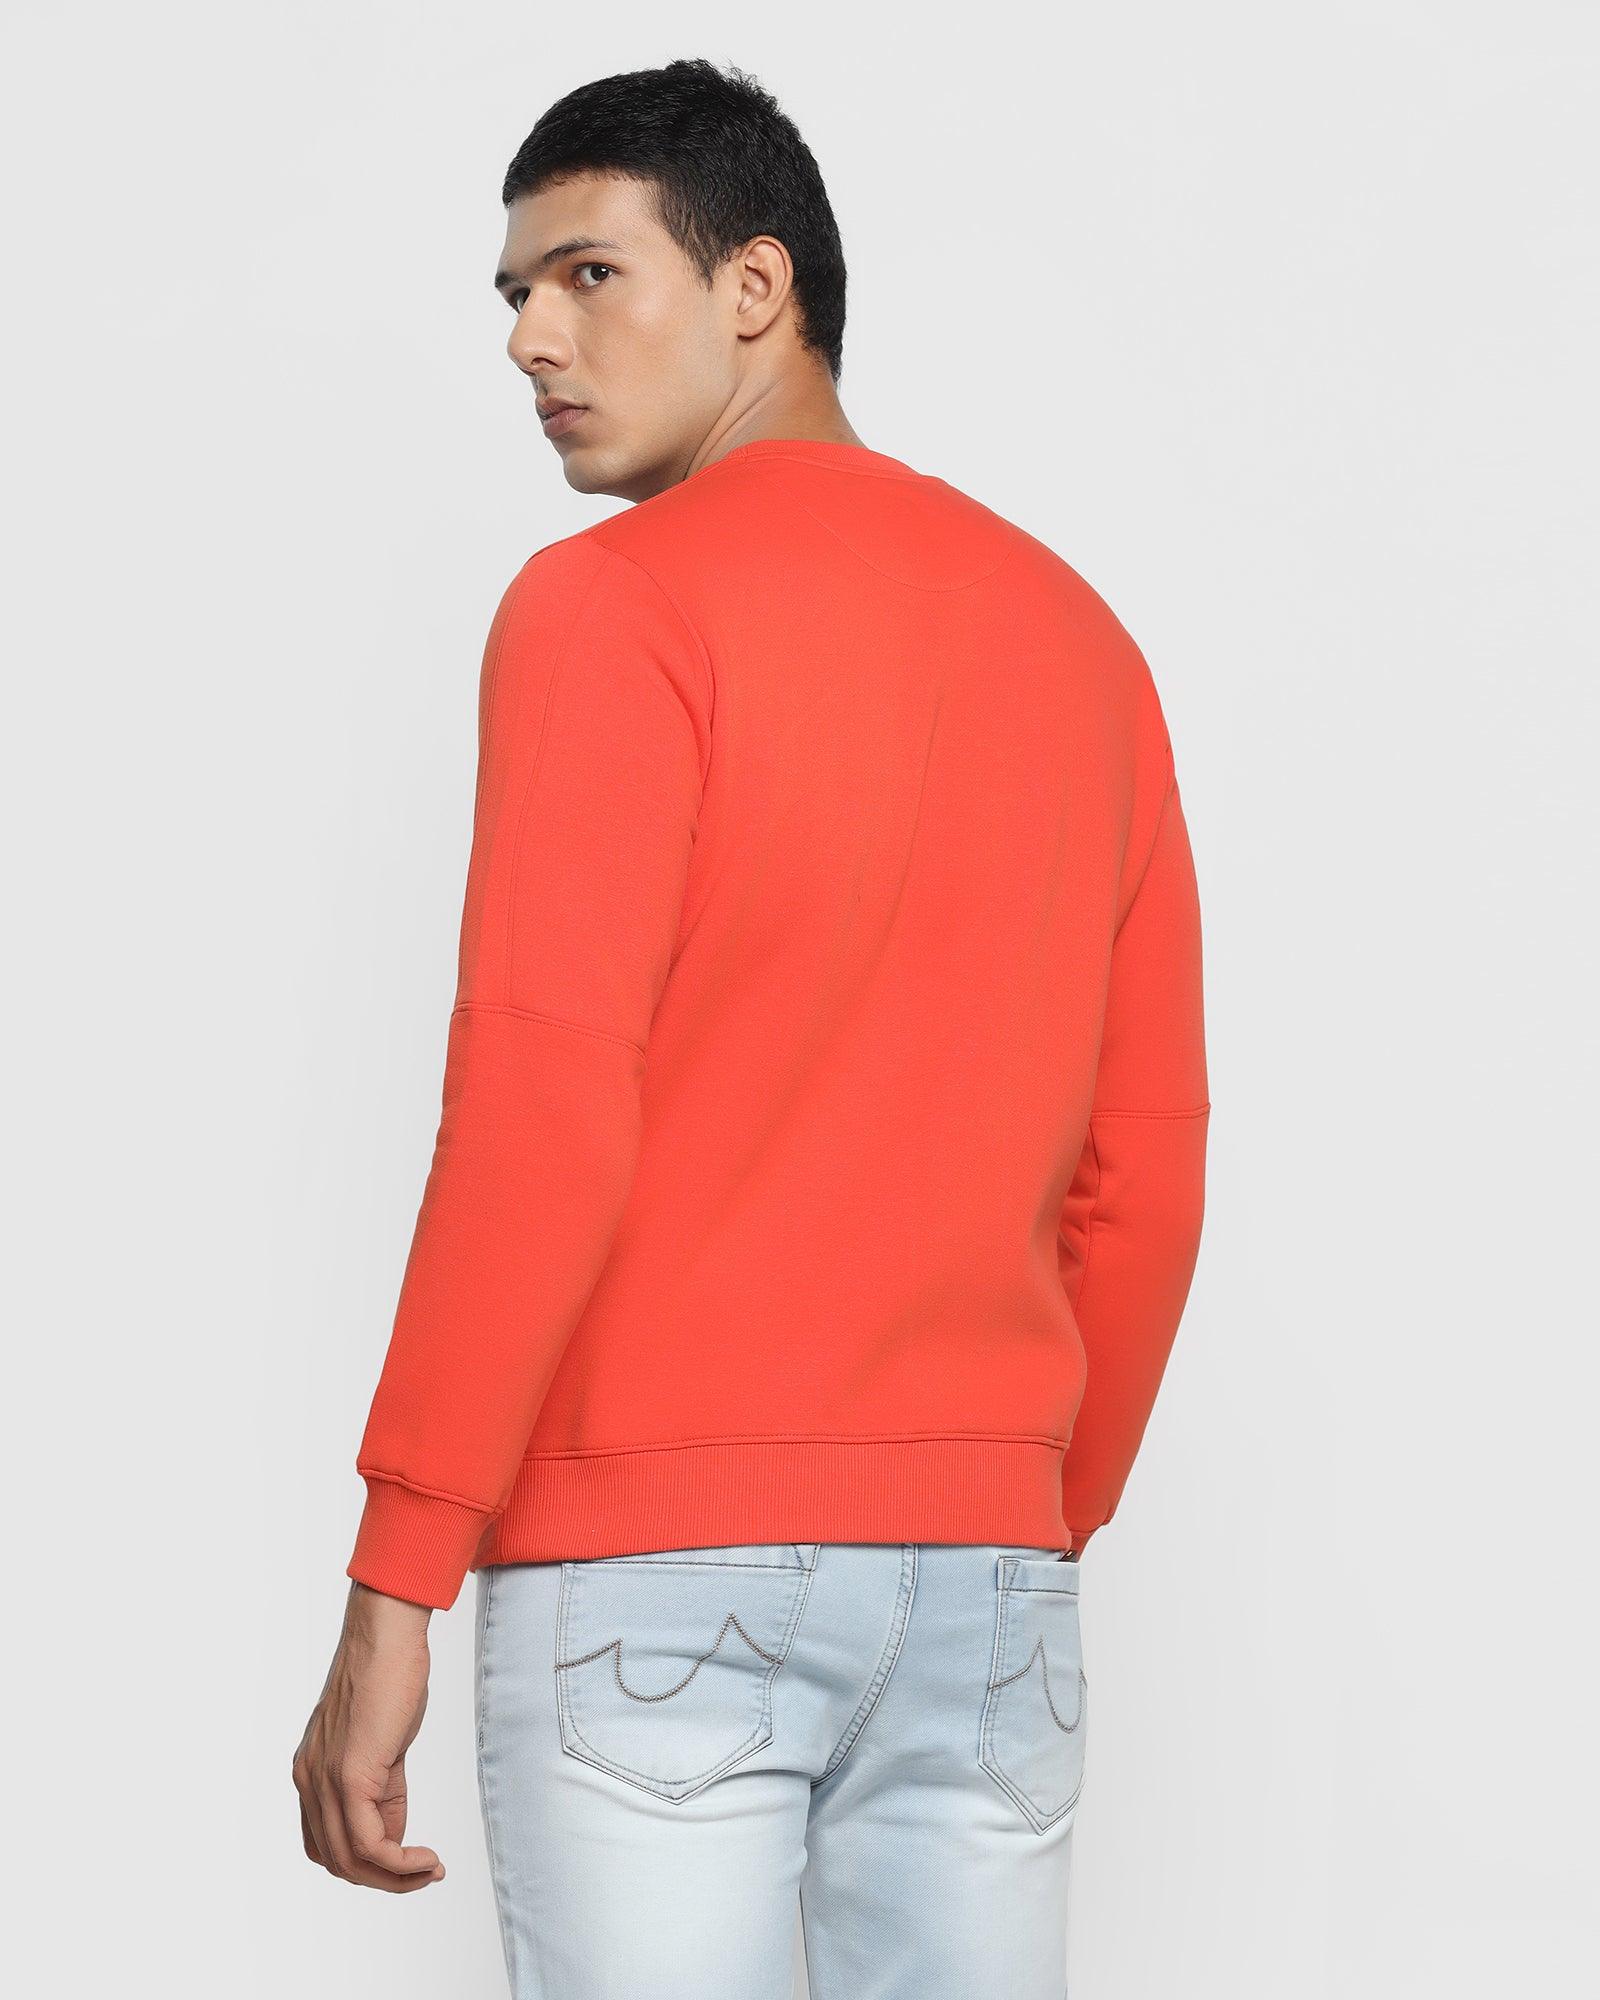 Crew Neck Orange Printed Sweatshirt - Venem